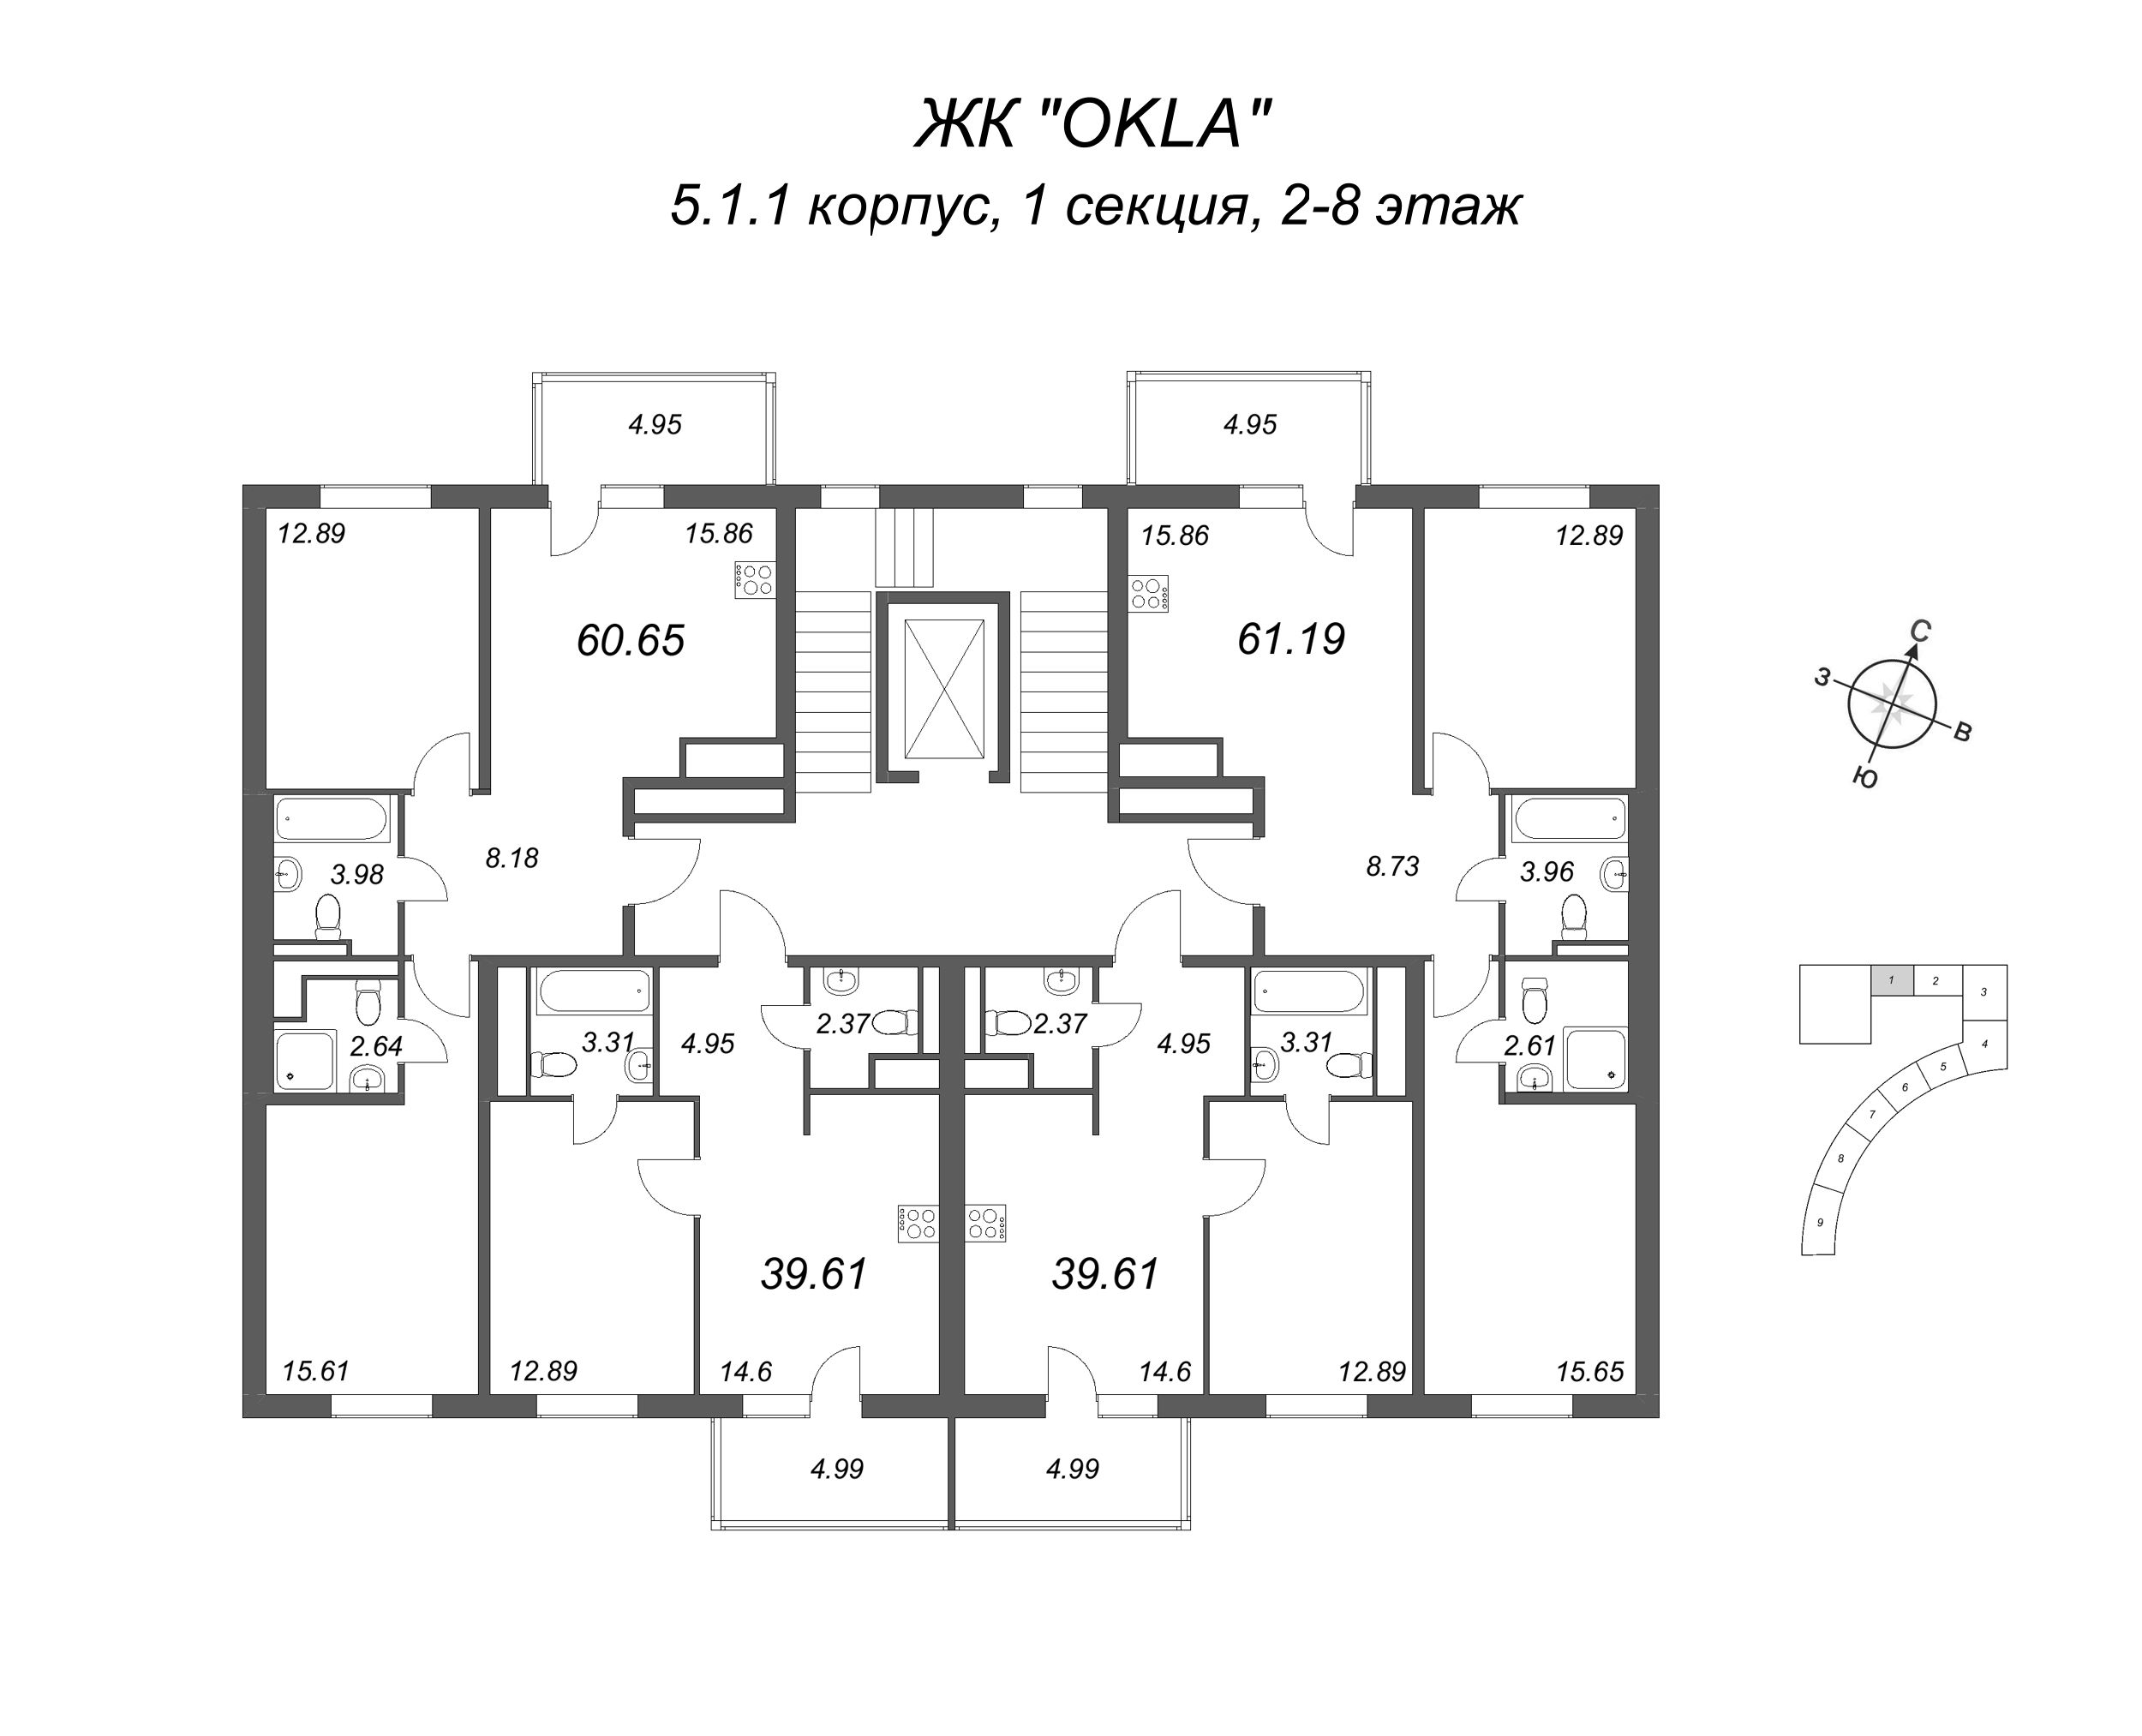 3-комнатная (Евро) квартира, 64.13 м² - планировка этажа